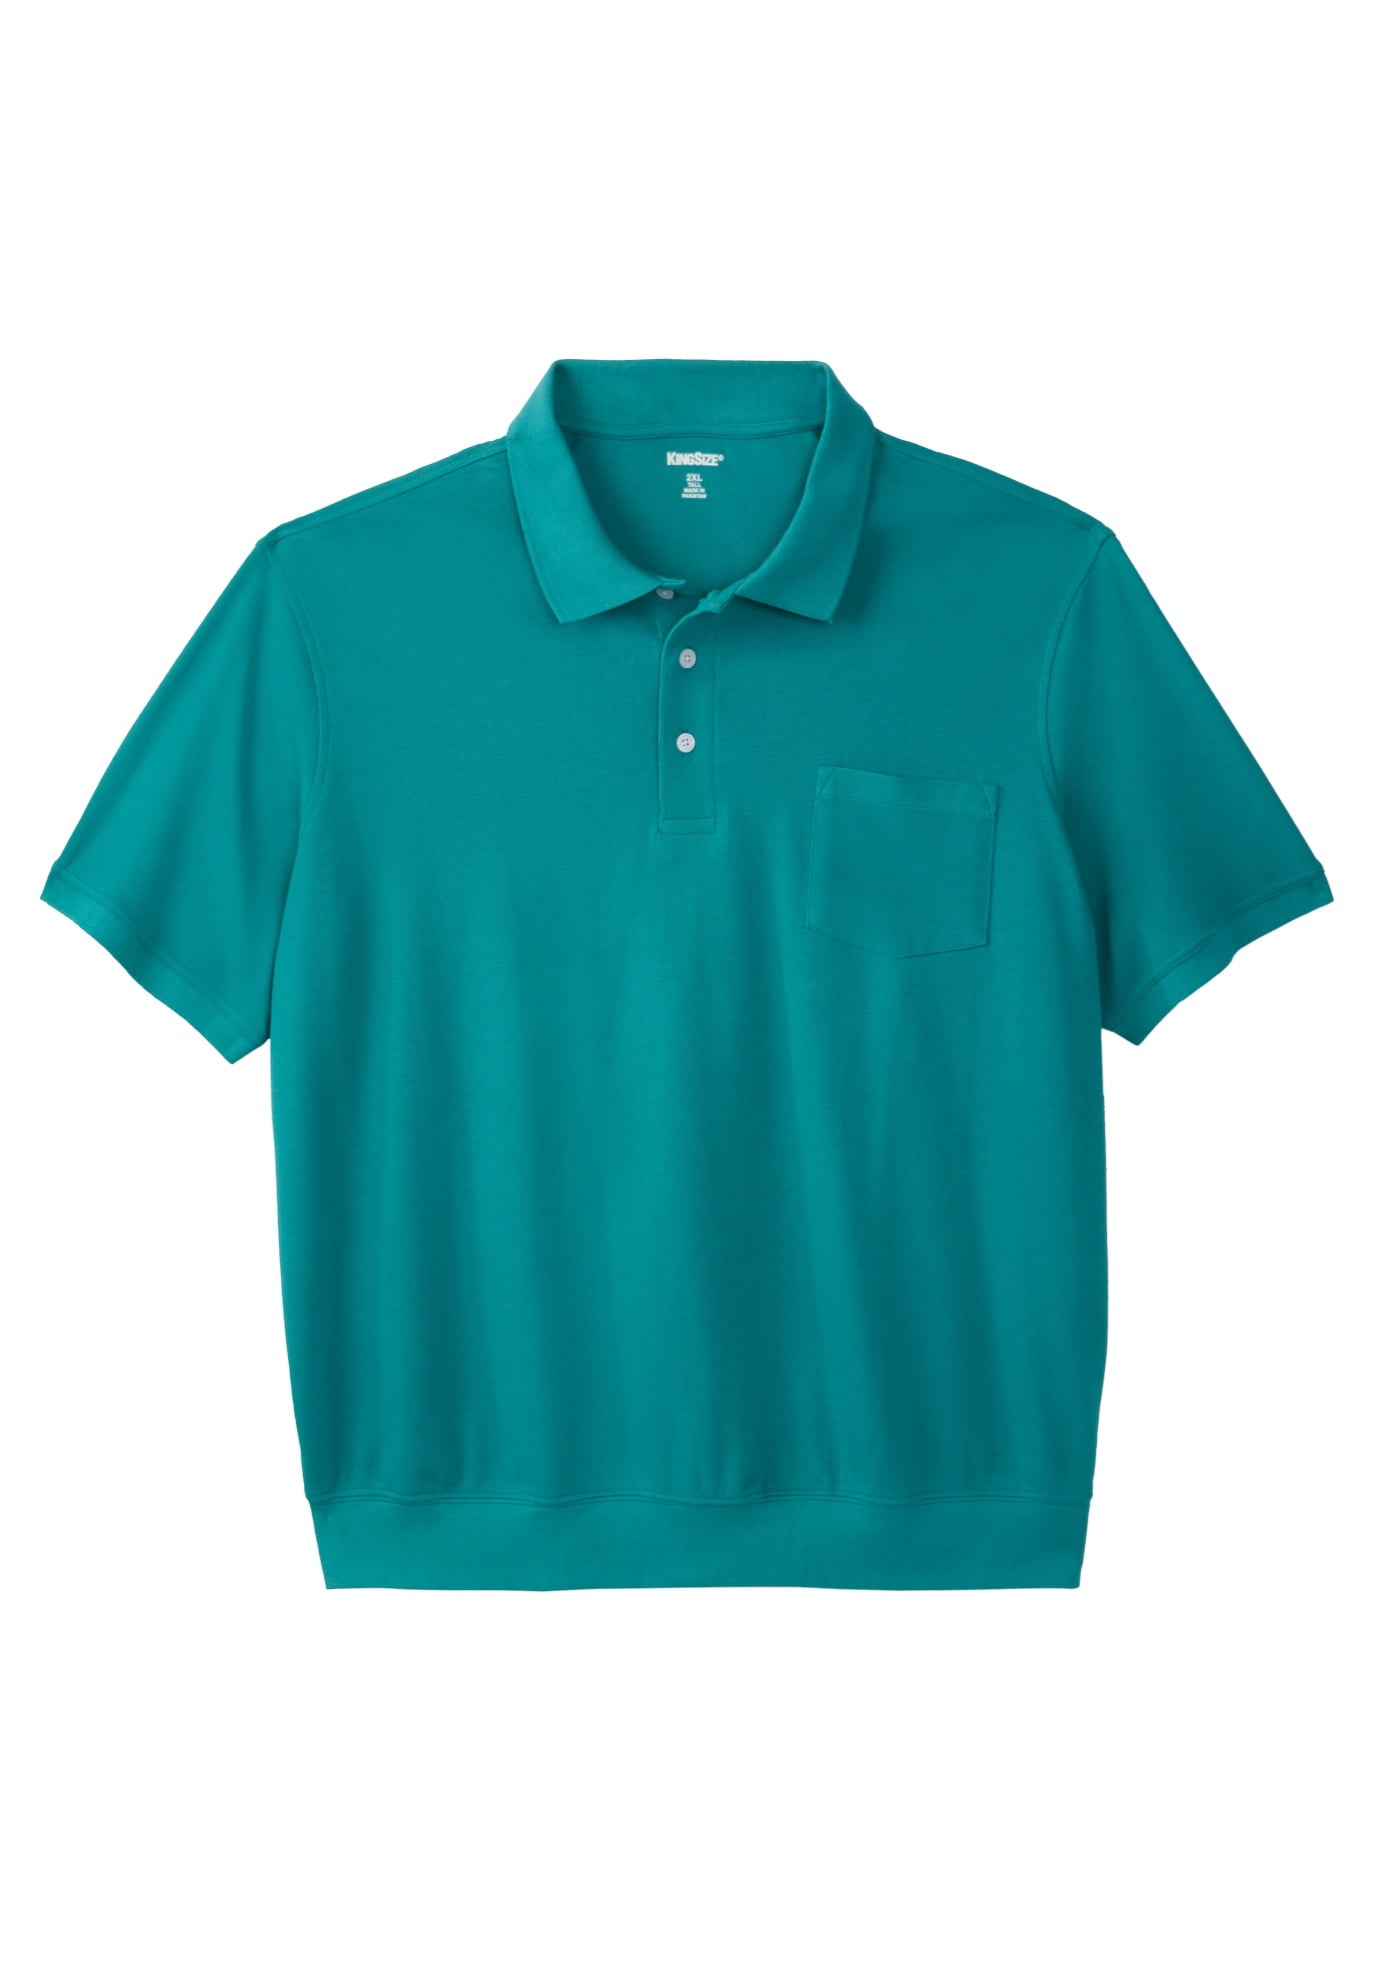 KingSize Men's Big & Tall Banded Bottom Pocket Piqué Polo Shirt 